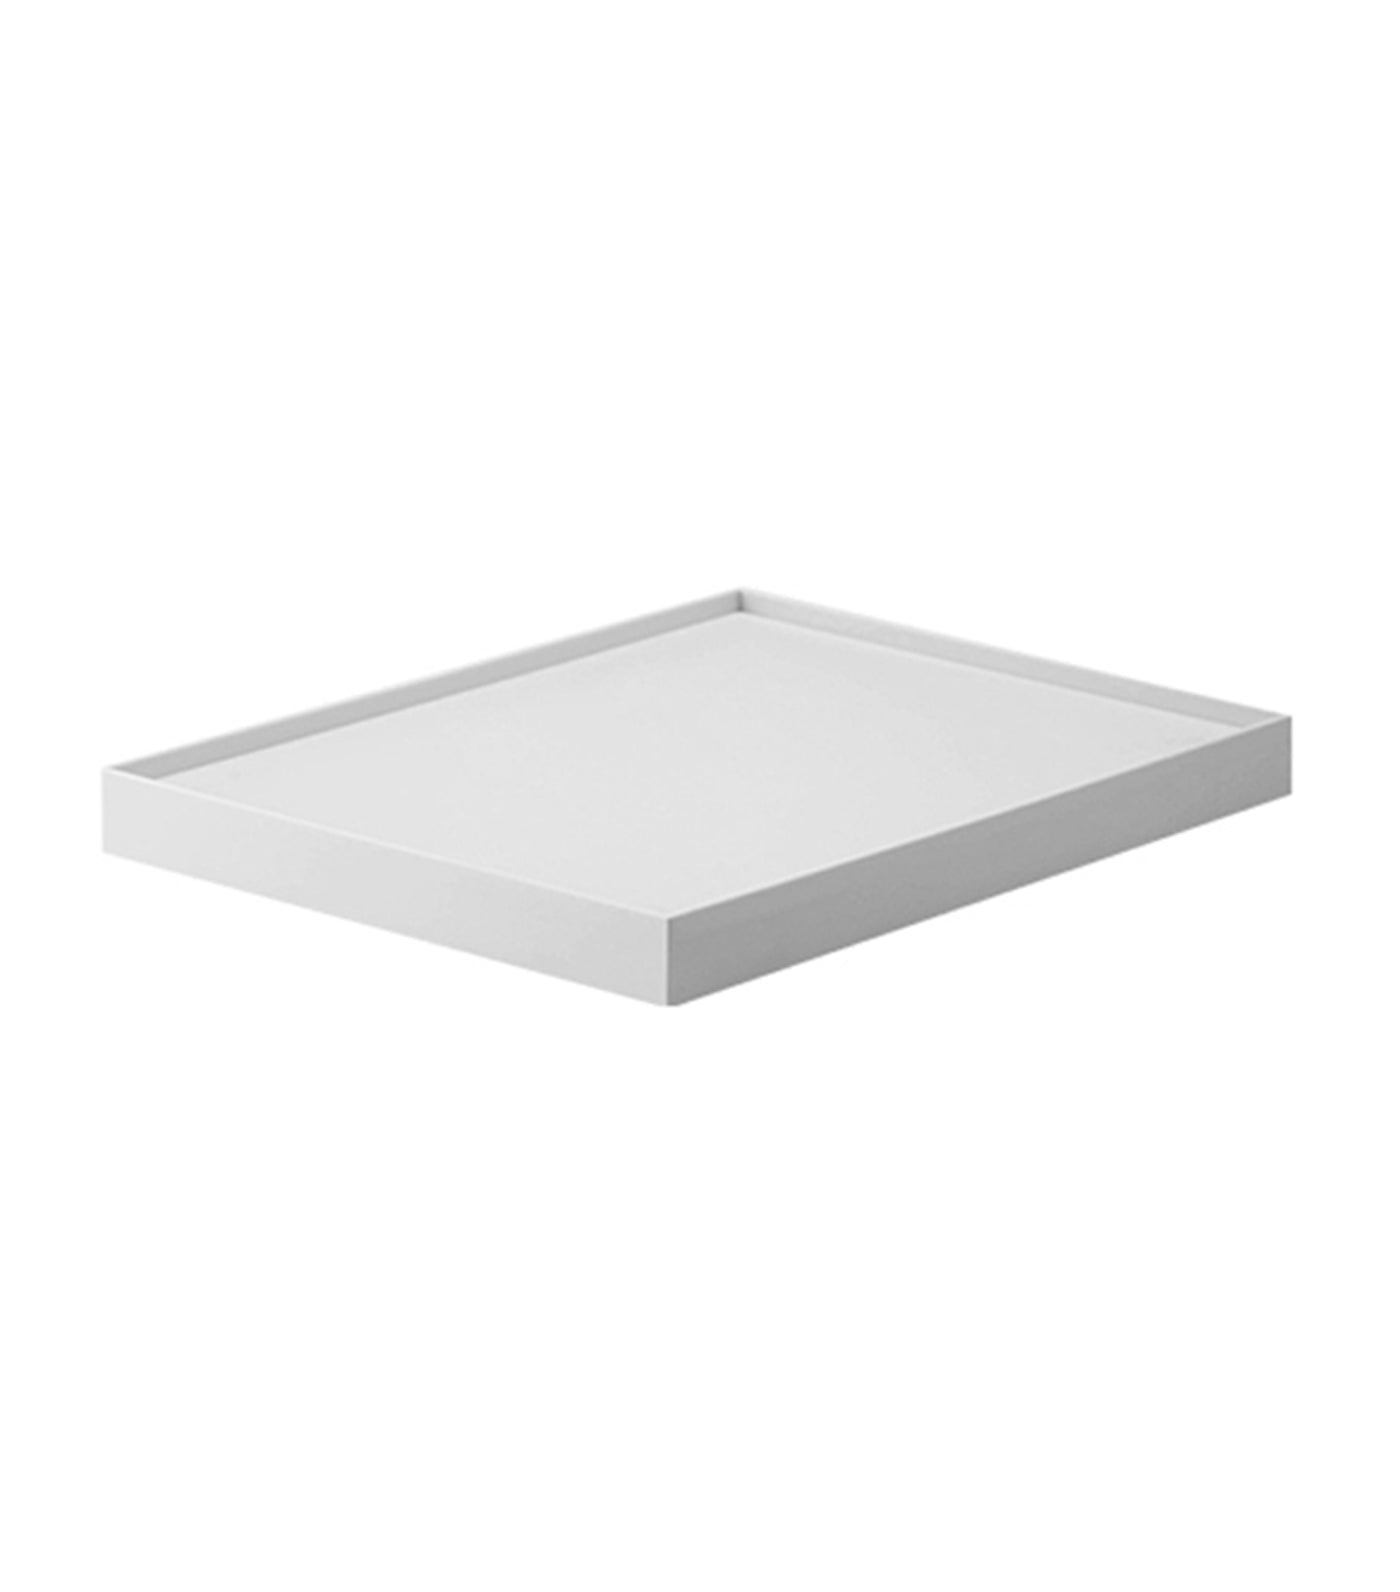 MakeRoom File Storage Box Lid - Gray